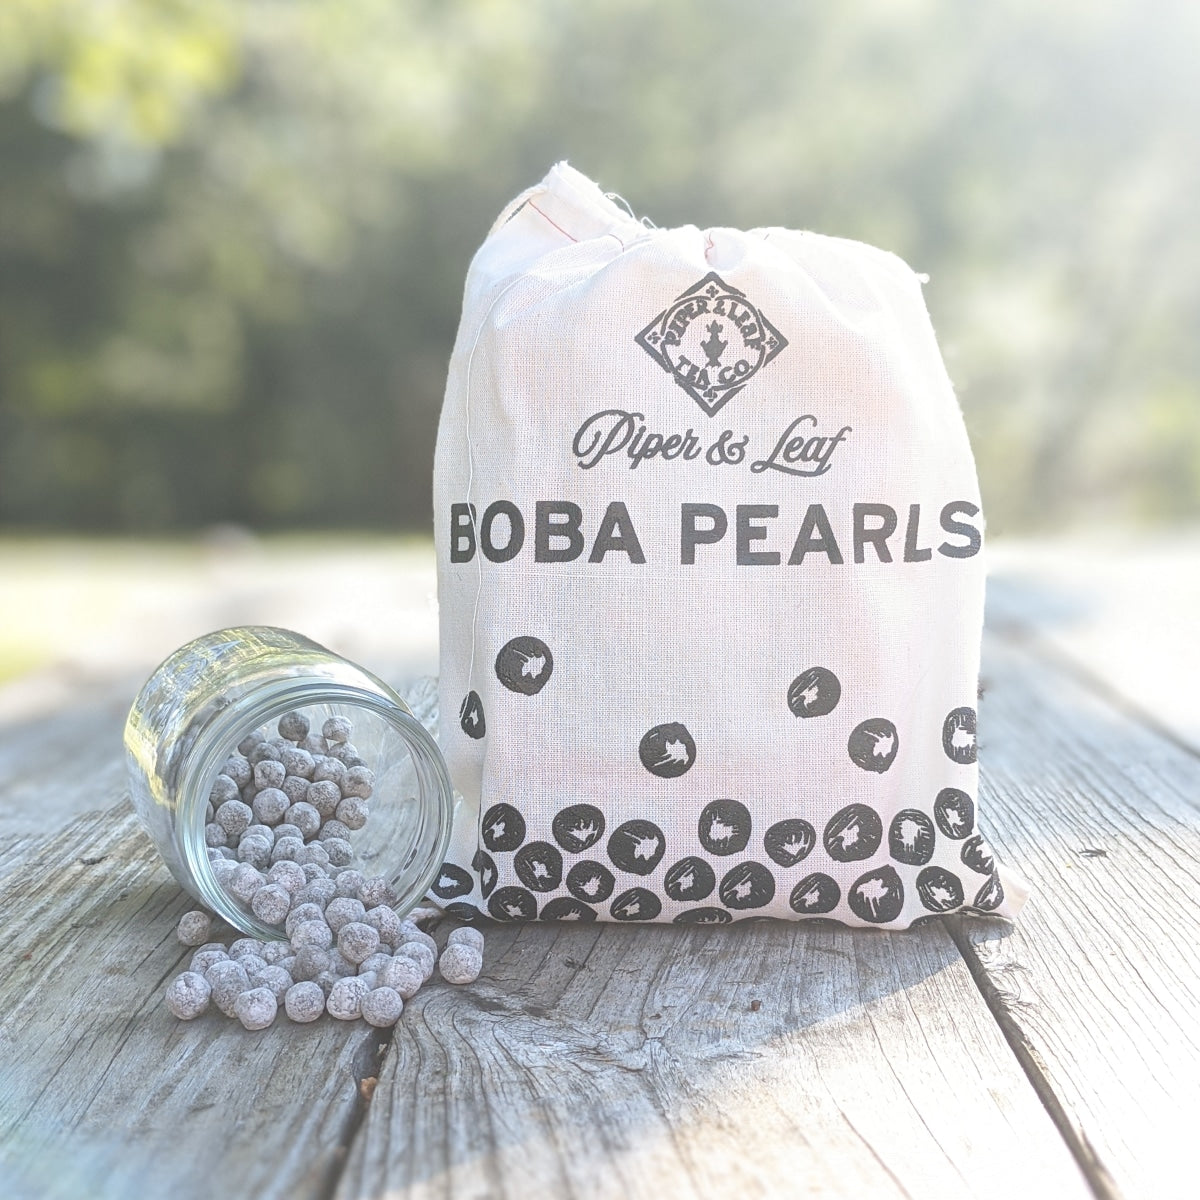 Boba Pearls (2.2lb) – Piper and Leaf Tea Co.